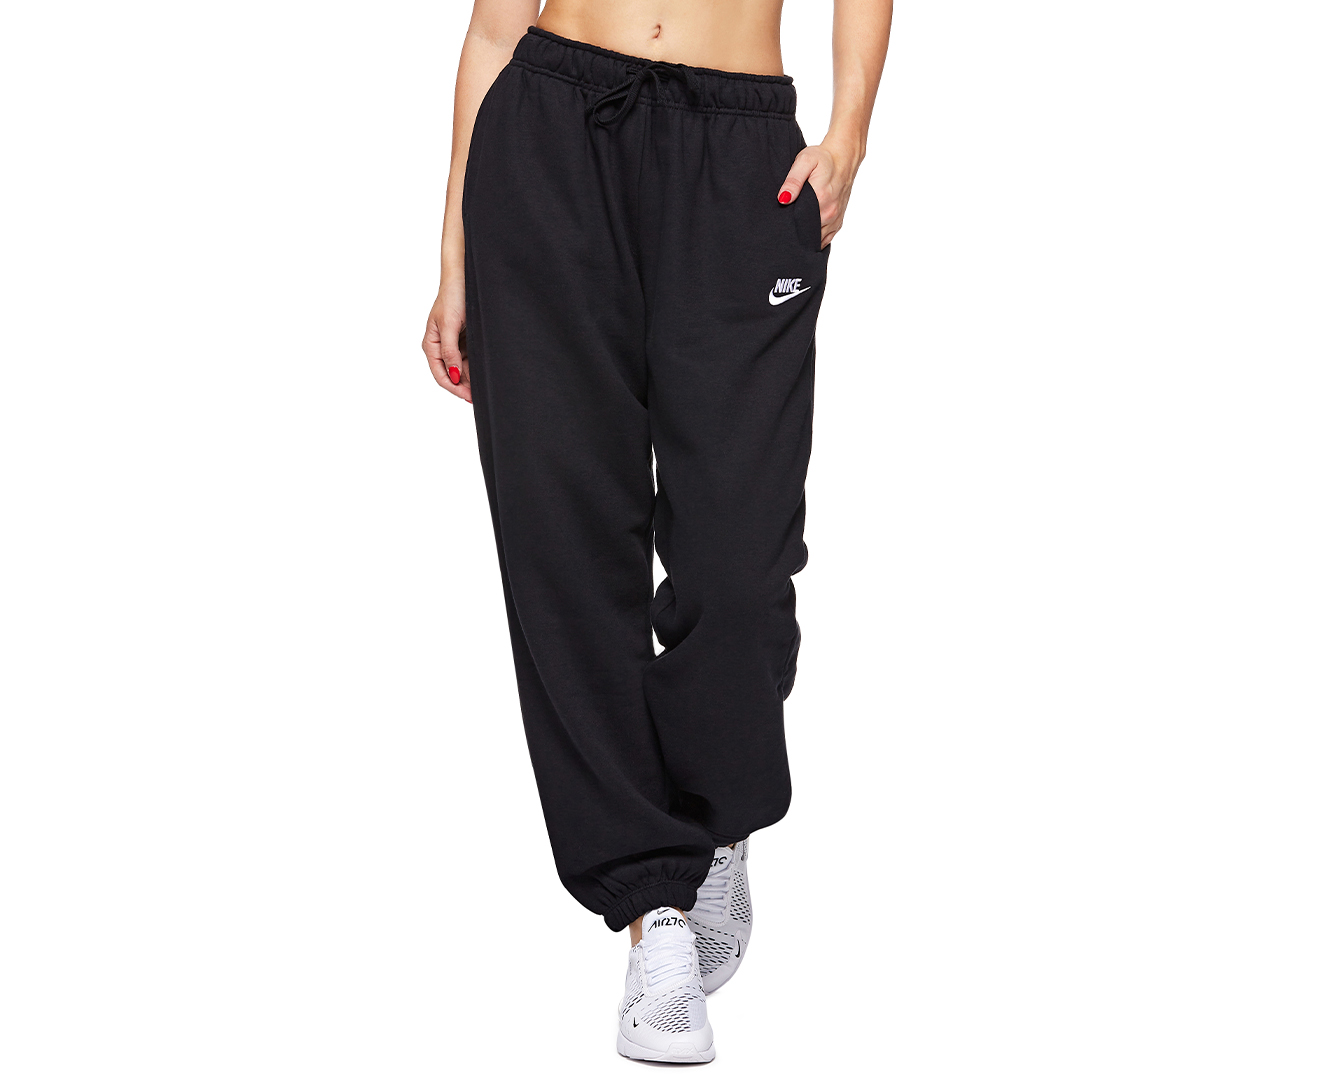 Nike Sportswear NSW Tracksuit Pants Black White 830345-010 Womens